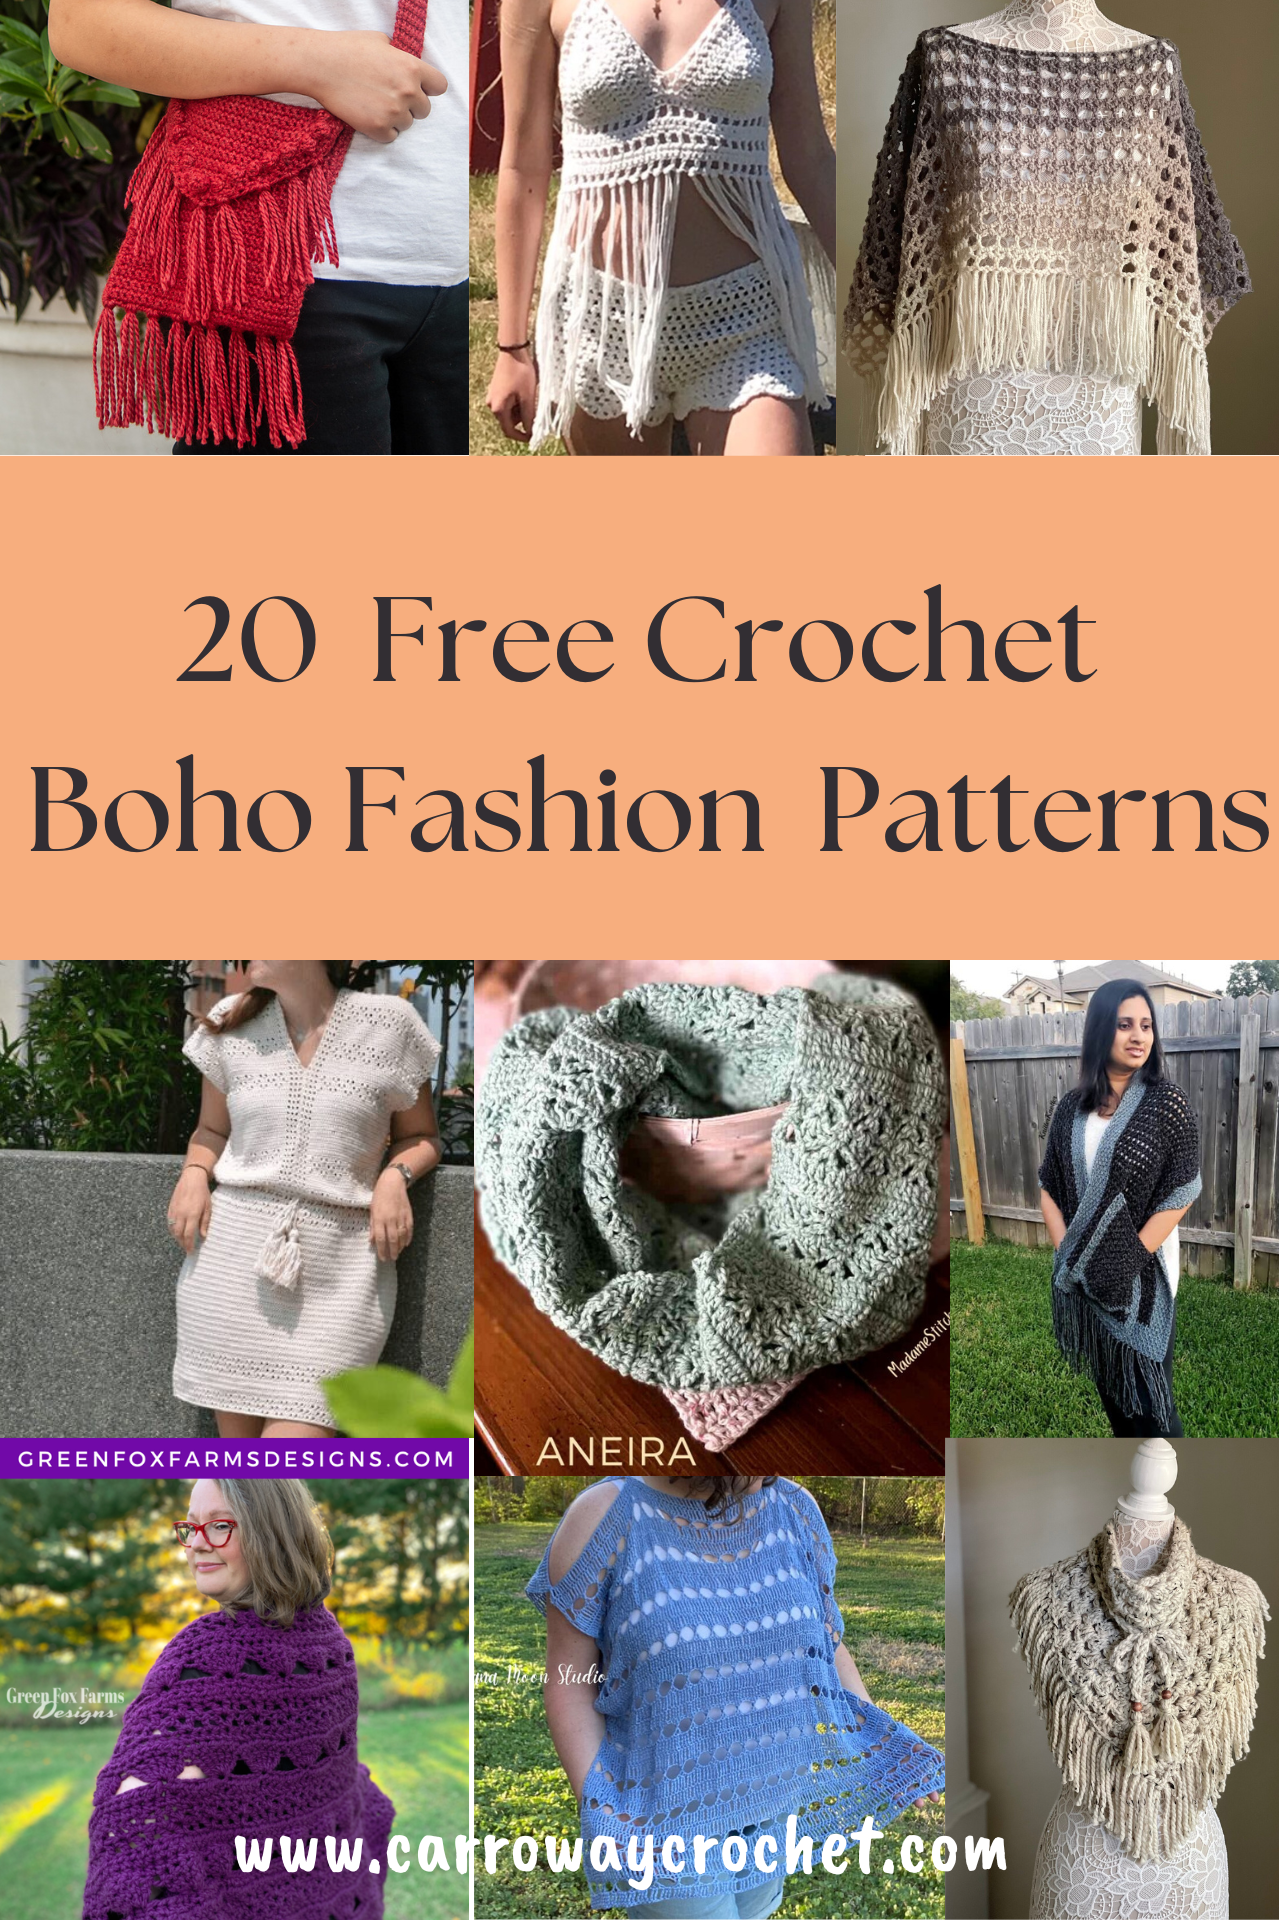 Boho Women's Crochet Vest with Fringe - Free On-Trend Crochet Pattern